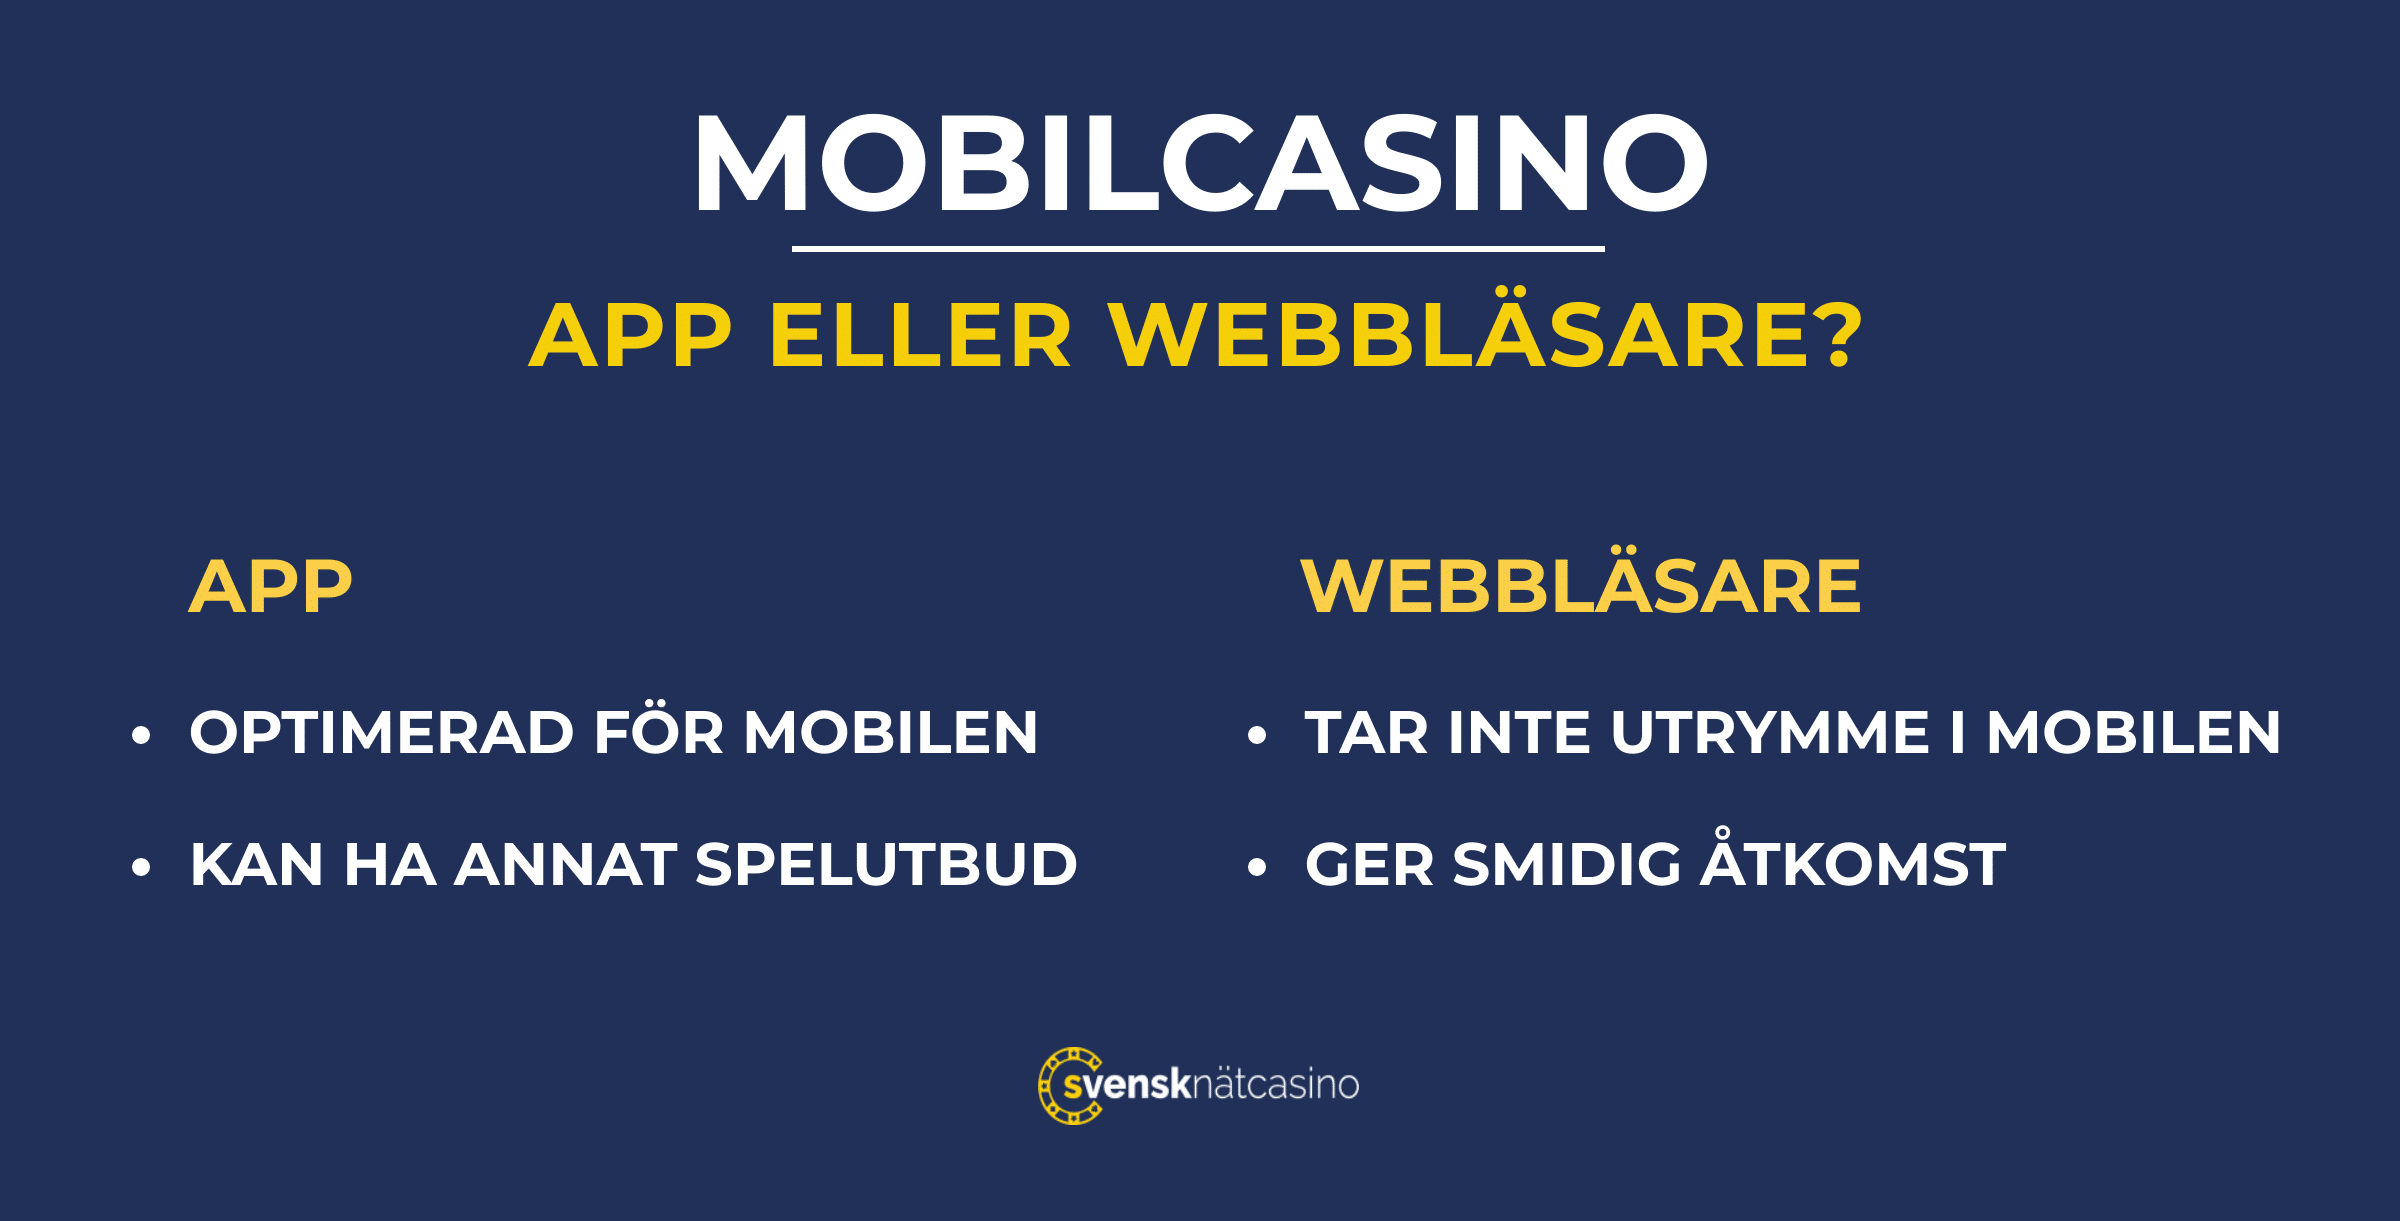 mobilcasino app eller webblasare svensknatcasino se